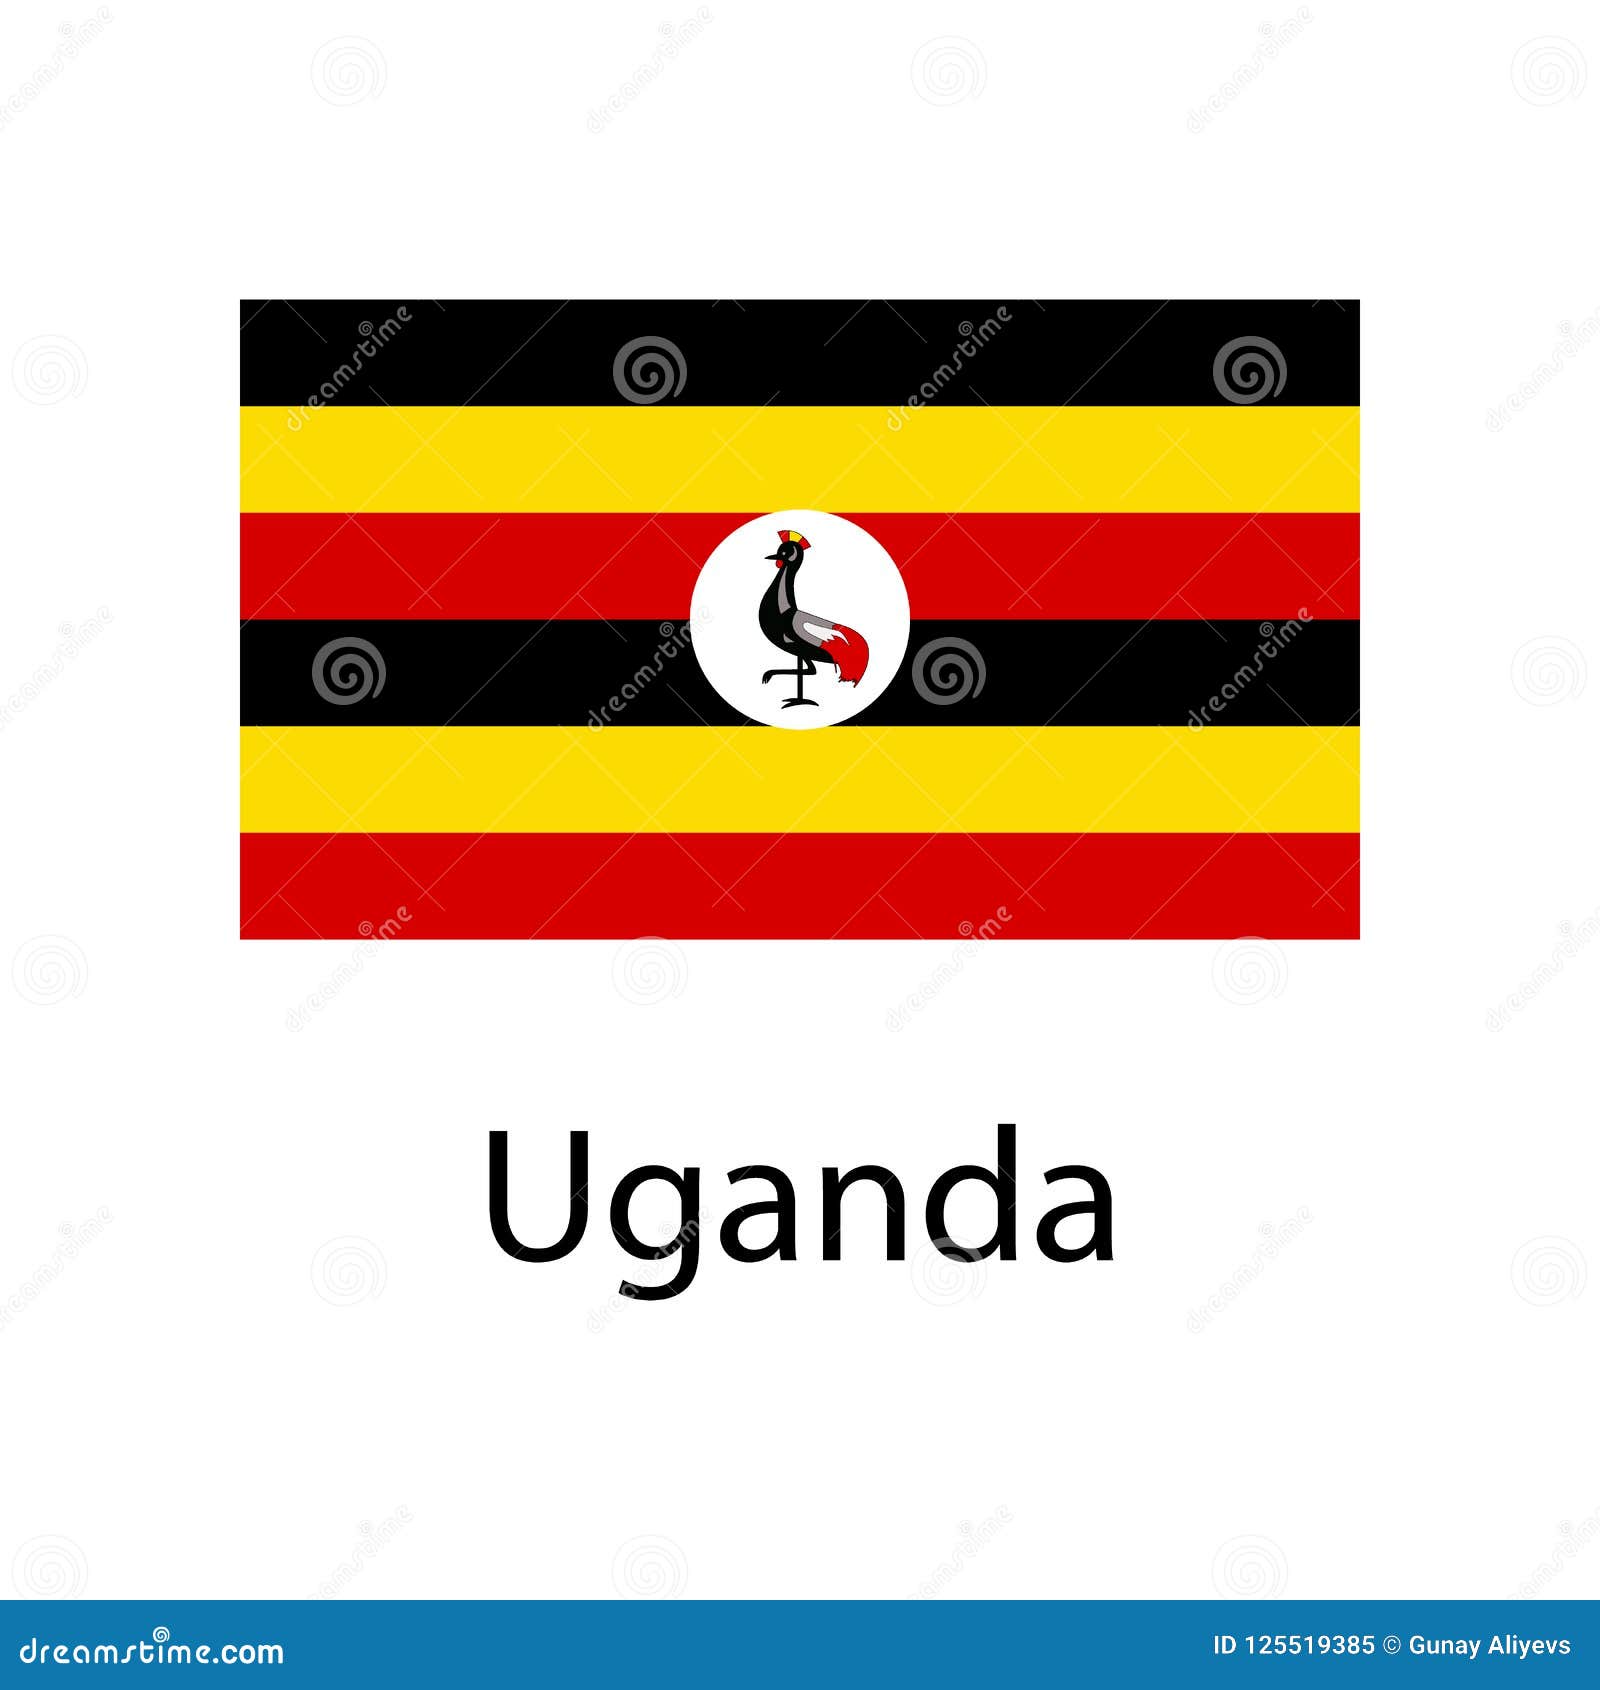 Image result for Uganda name